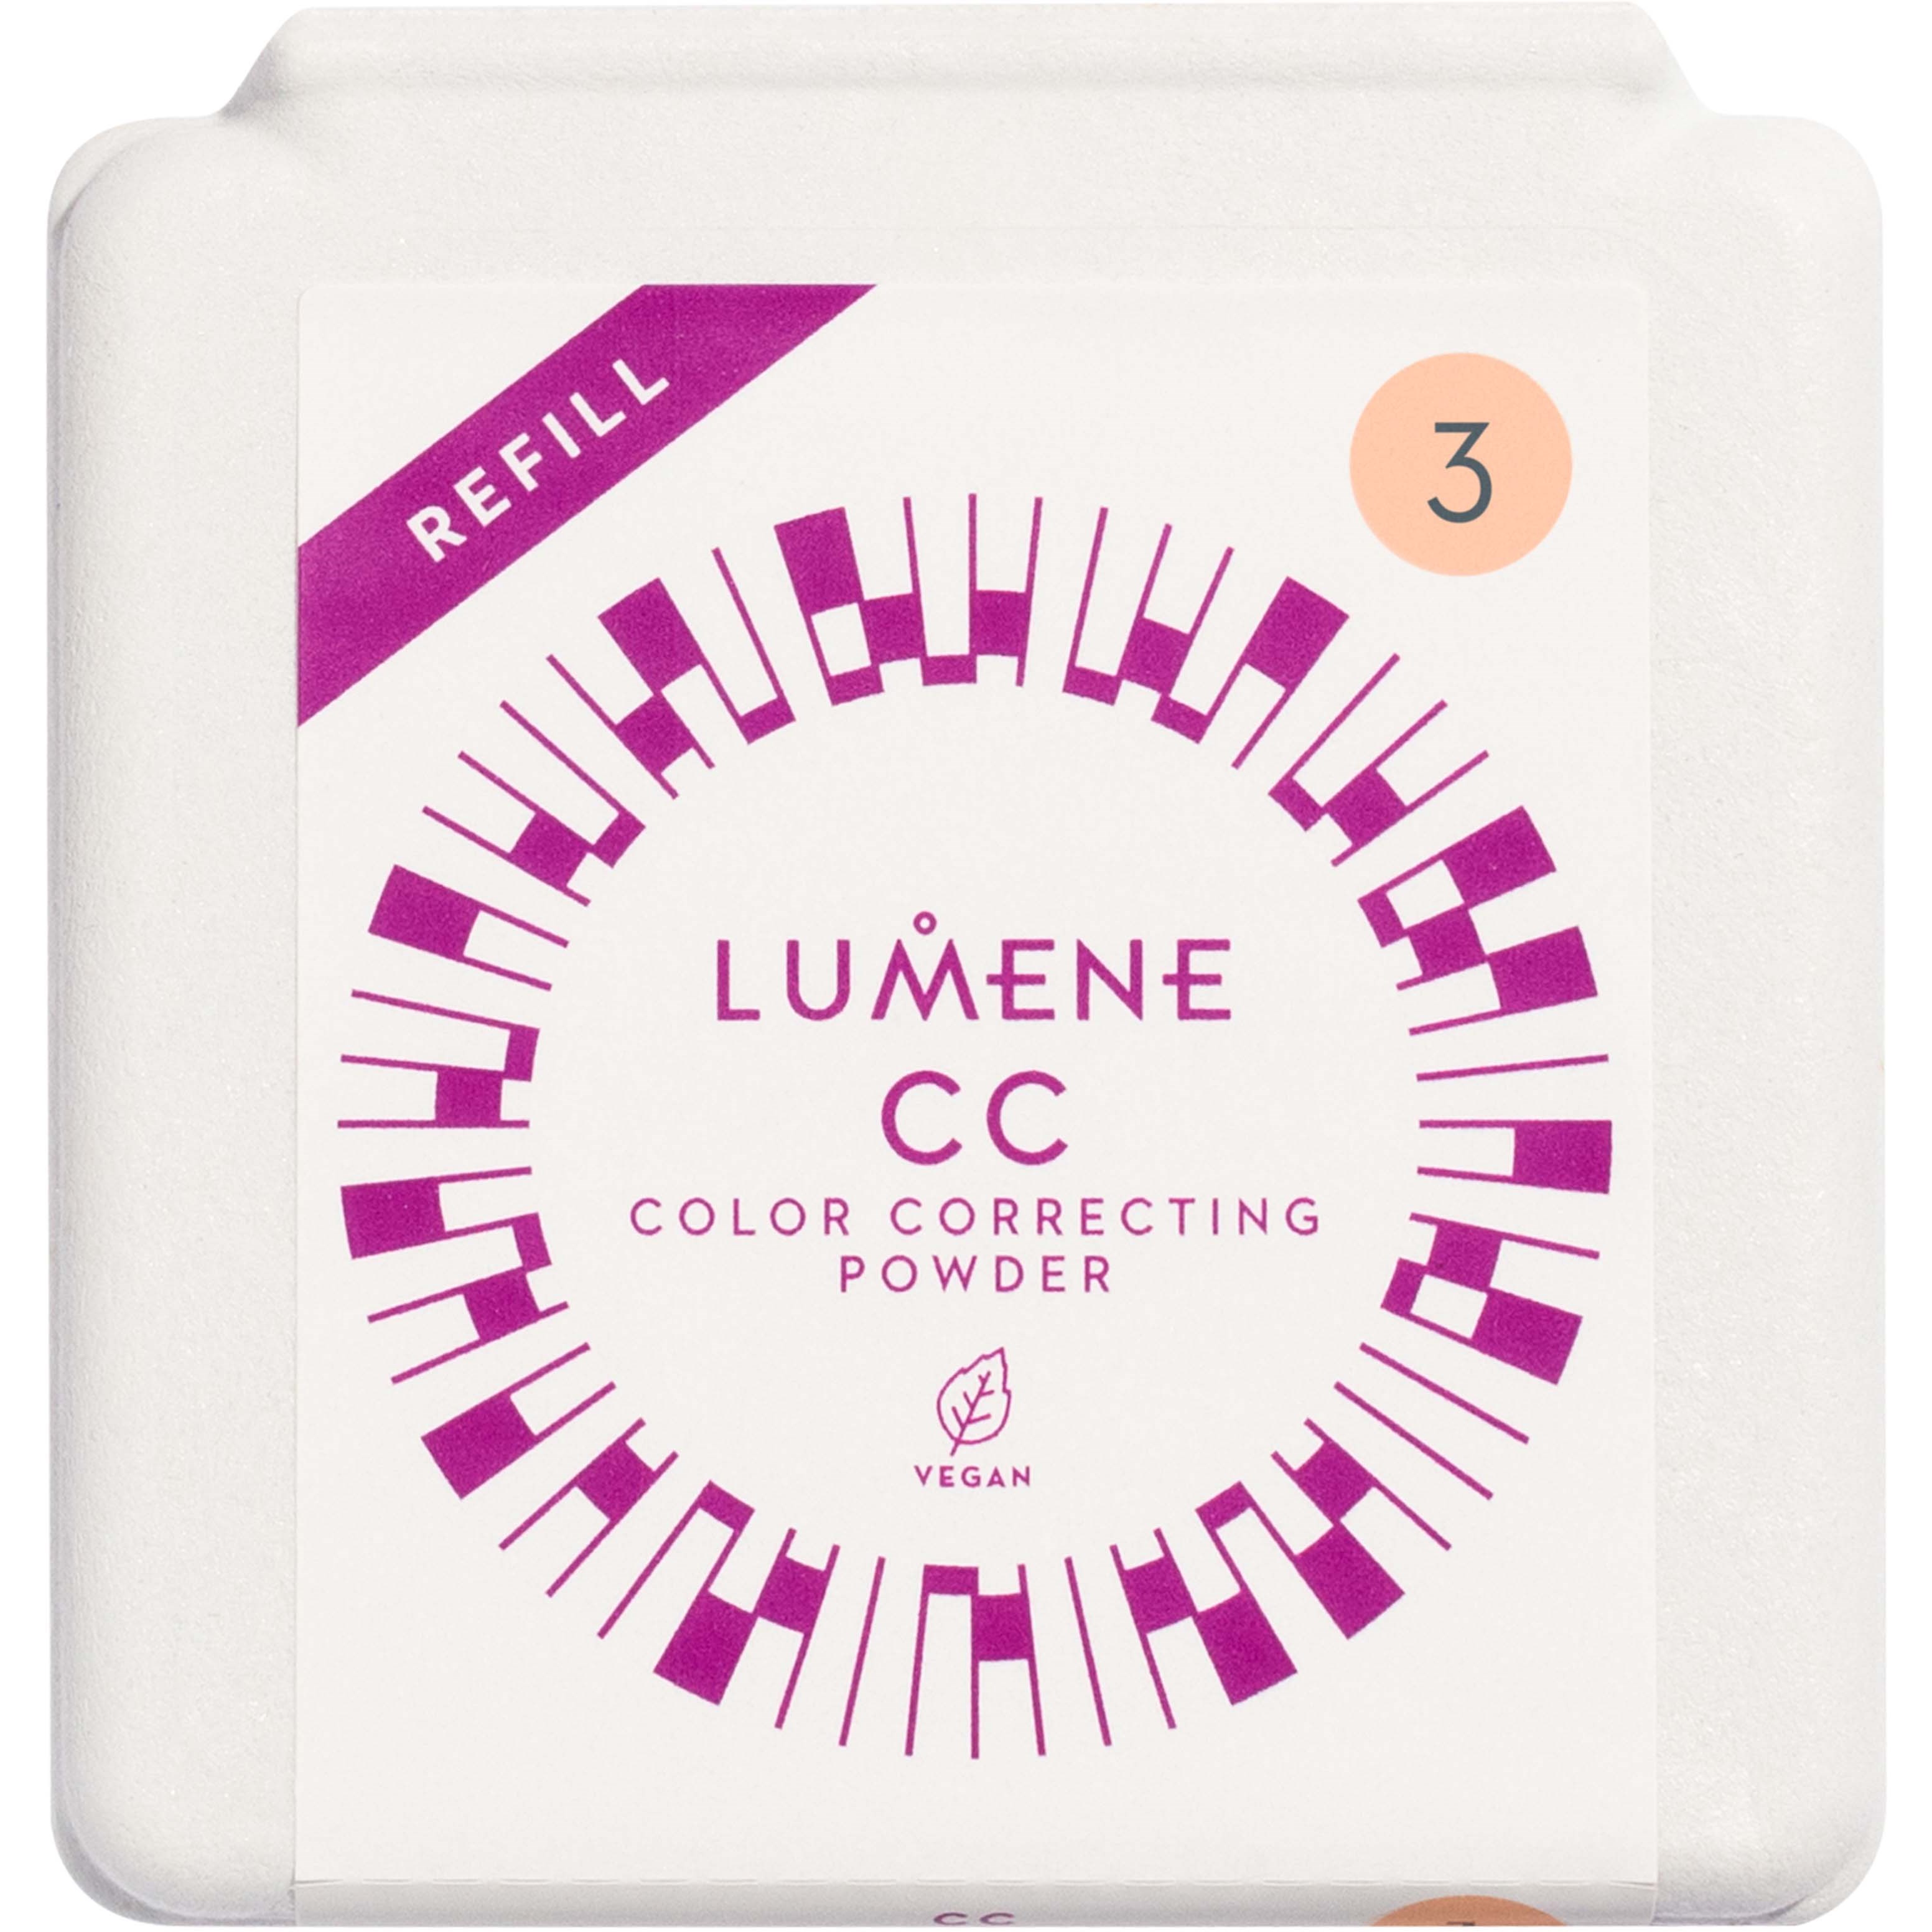 Lumene CC Color Correcting Powder Refill 3